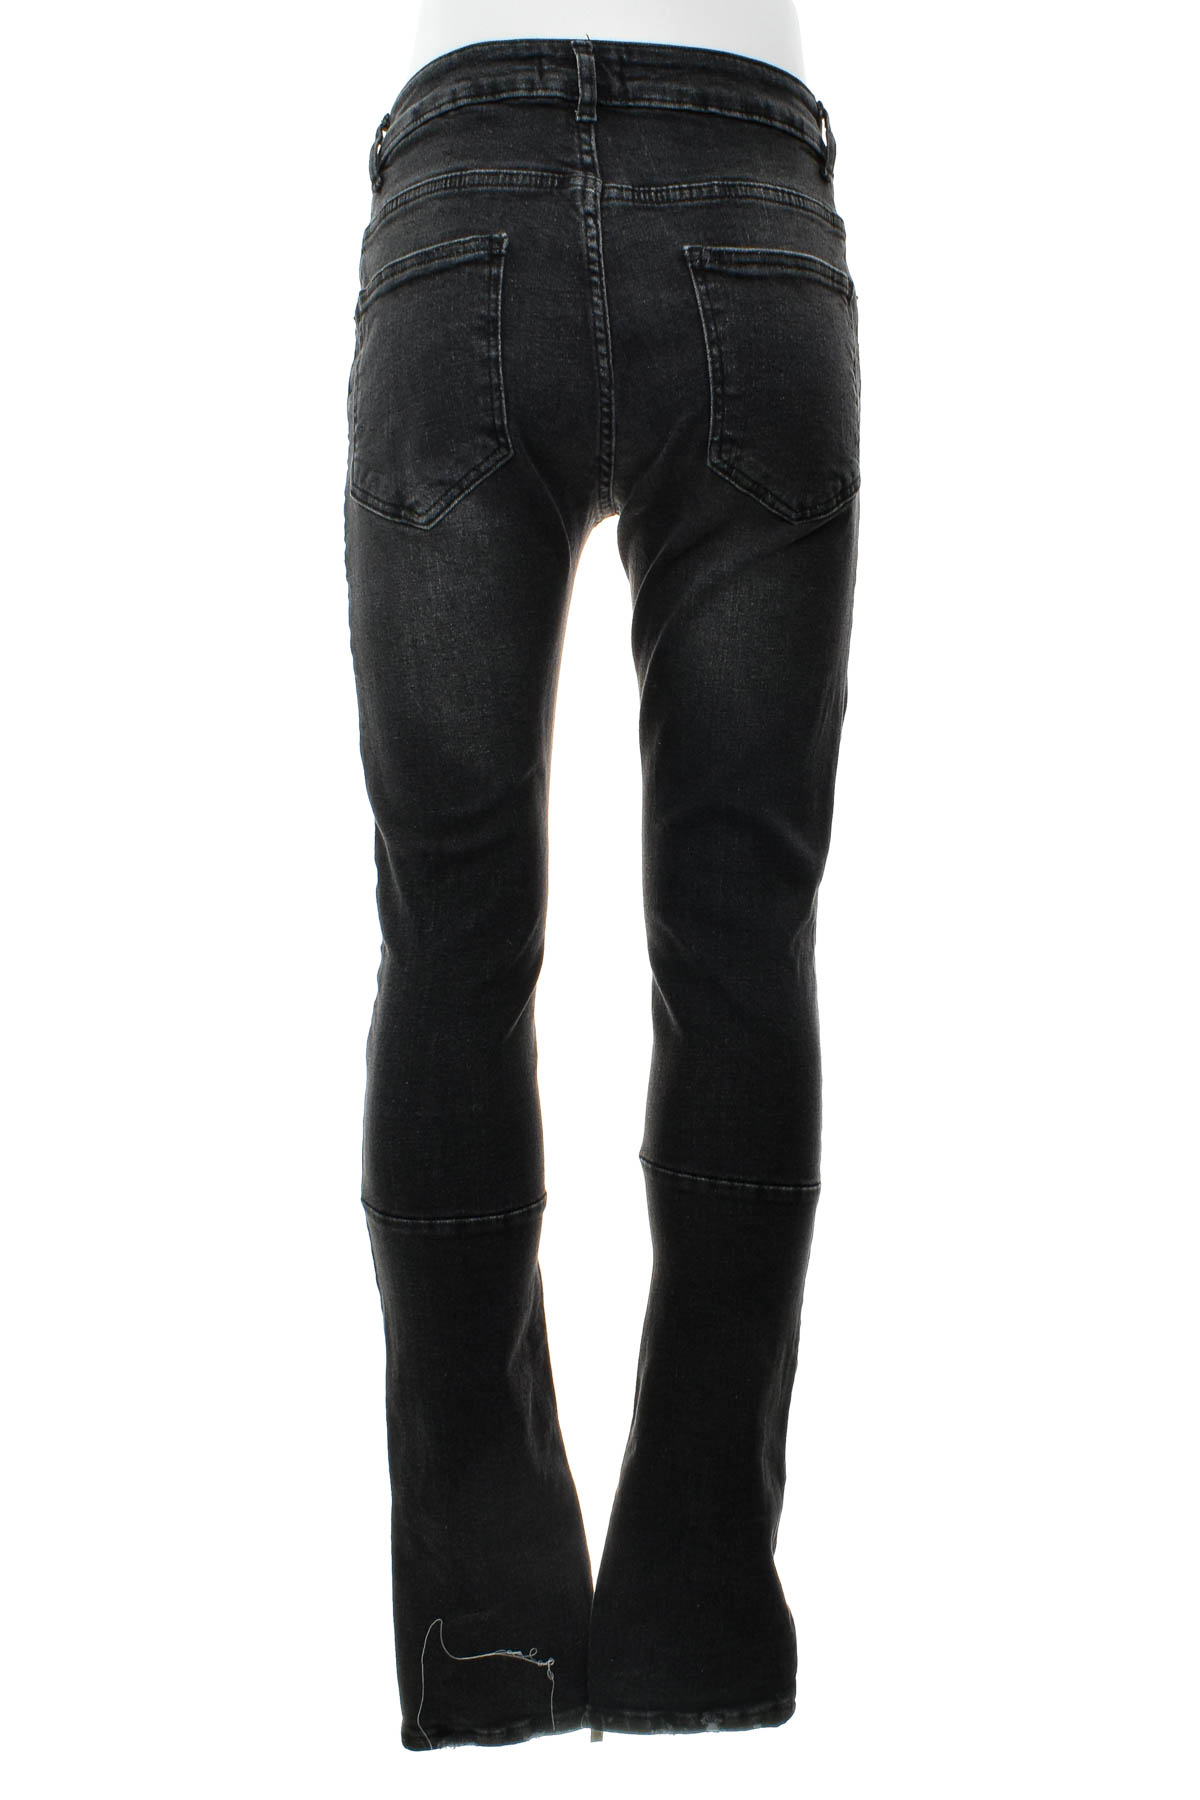 Men's jeans - IKAO - 1